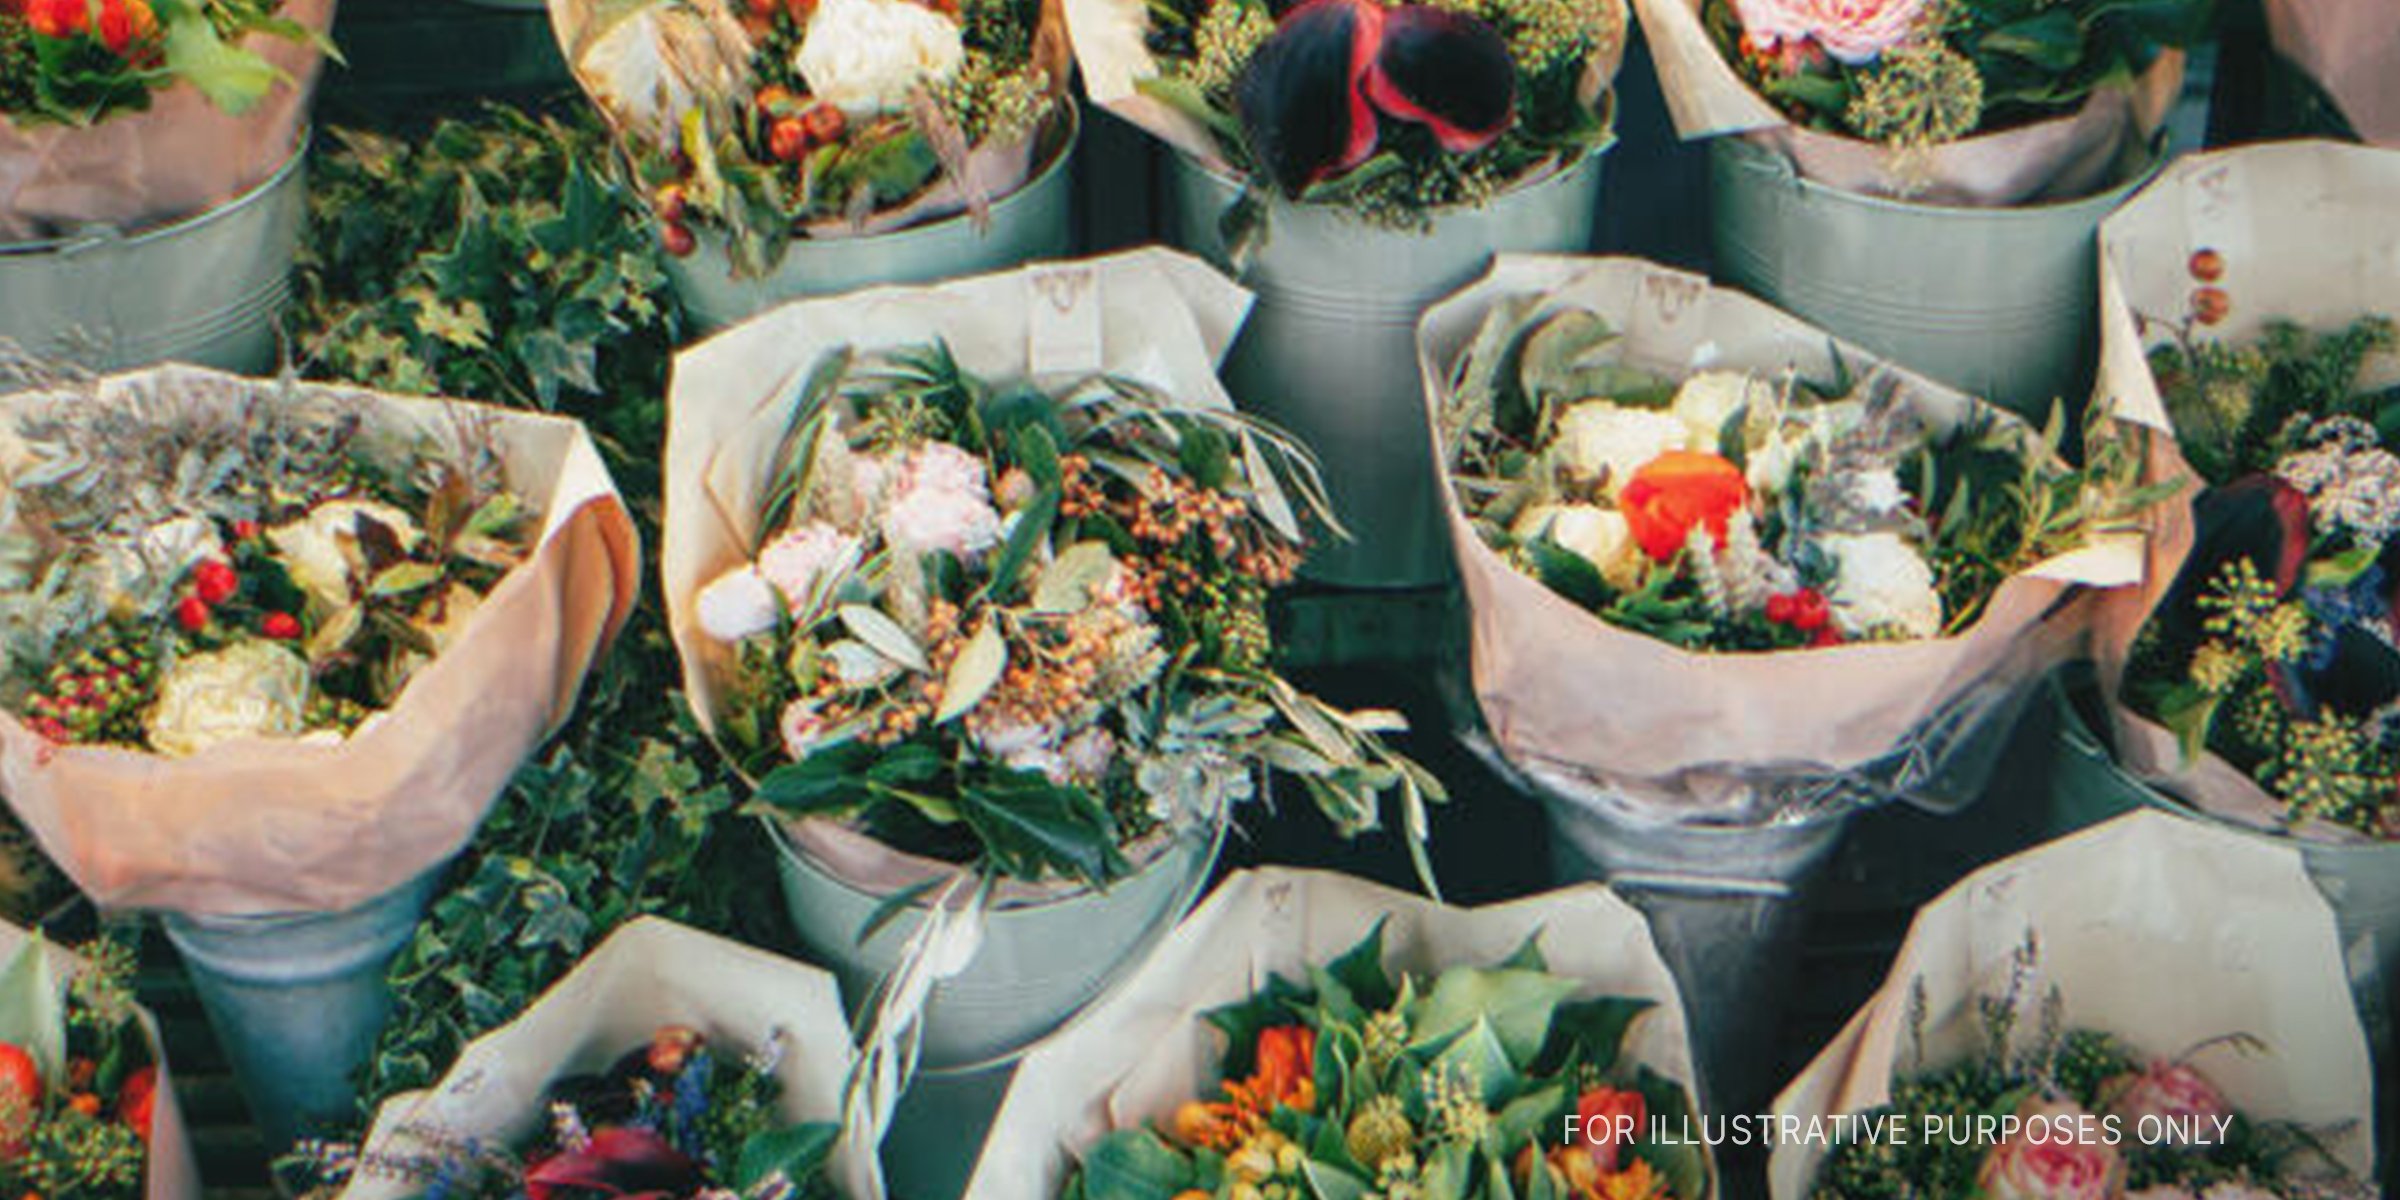 Several flower bouquets. | Source: Shutterstock